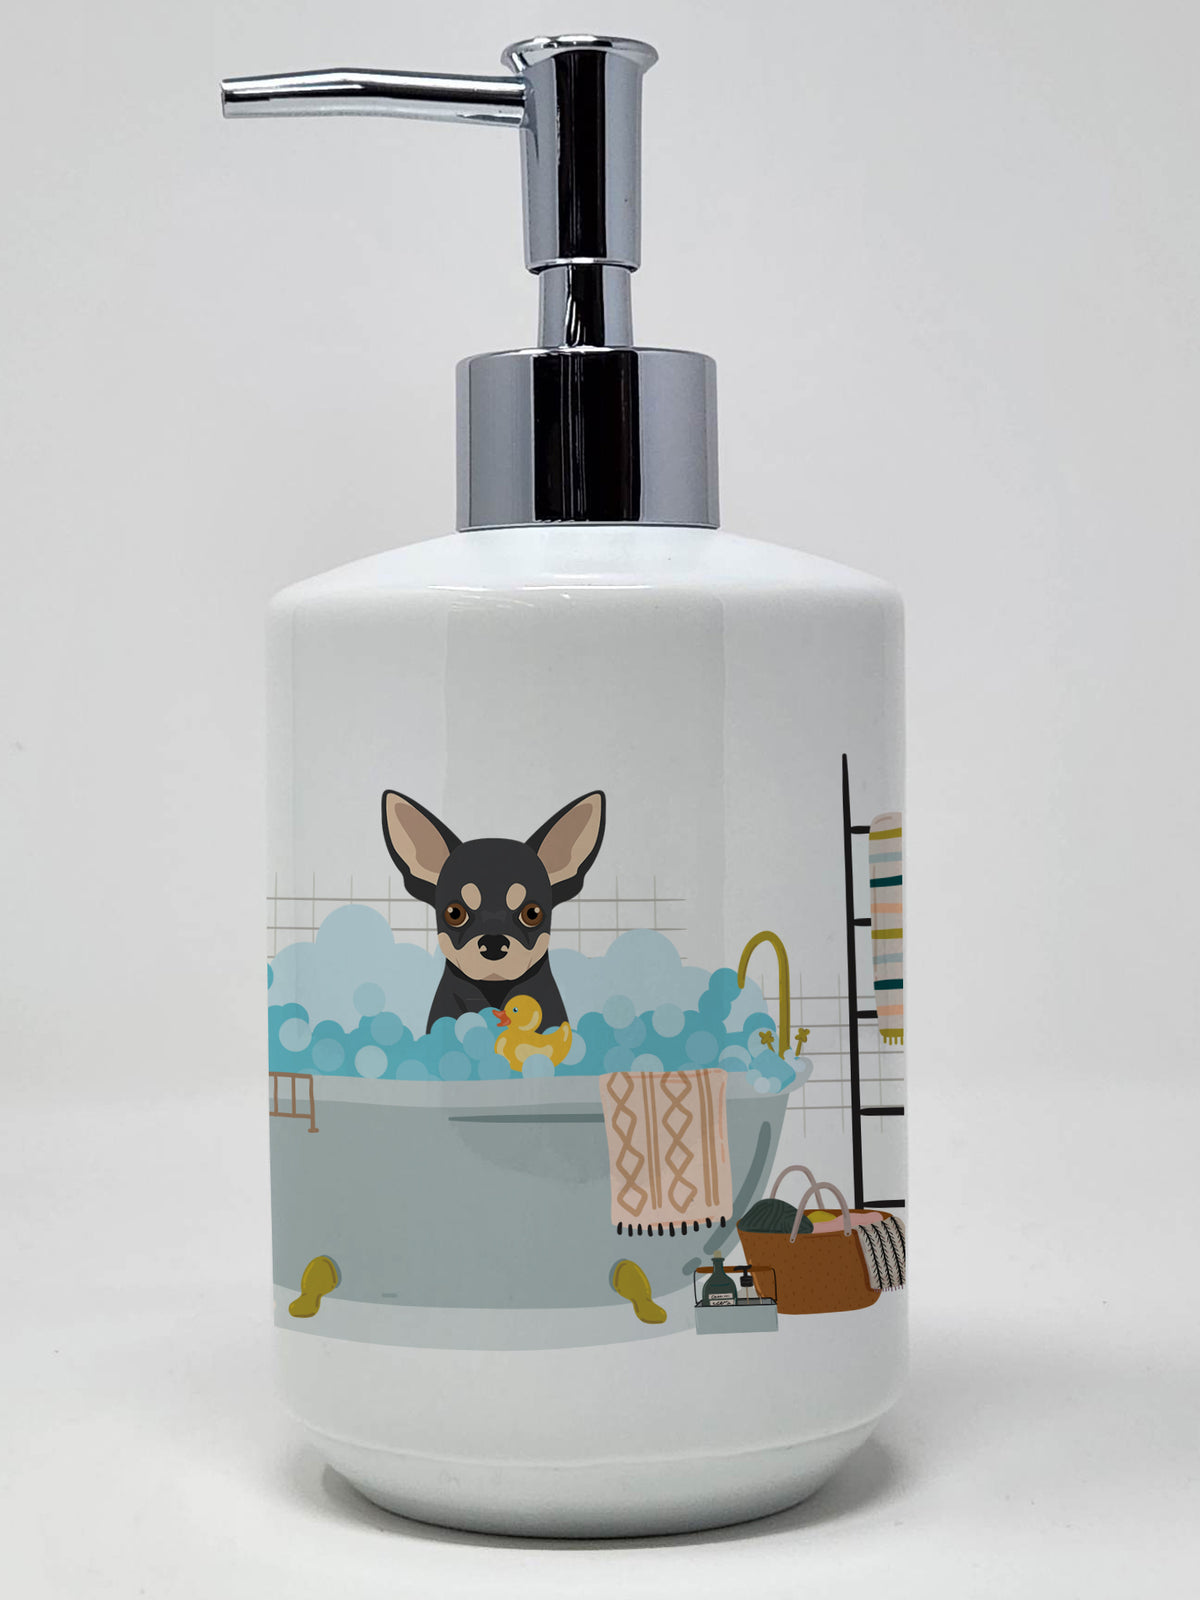 Buy this Black and Cream Chihuahua Ceramic Soap Dispenser